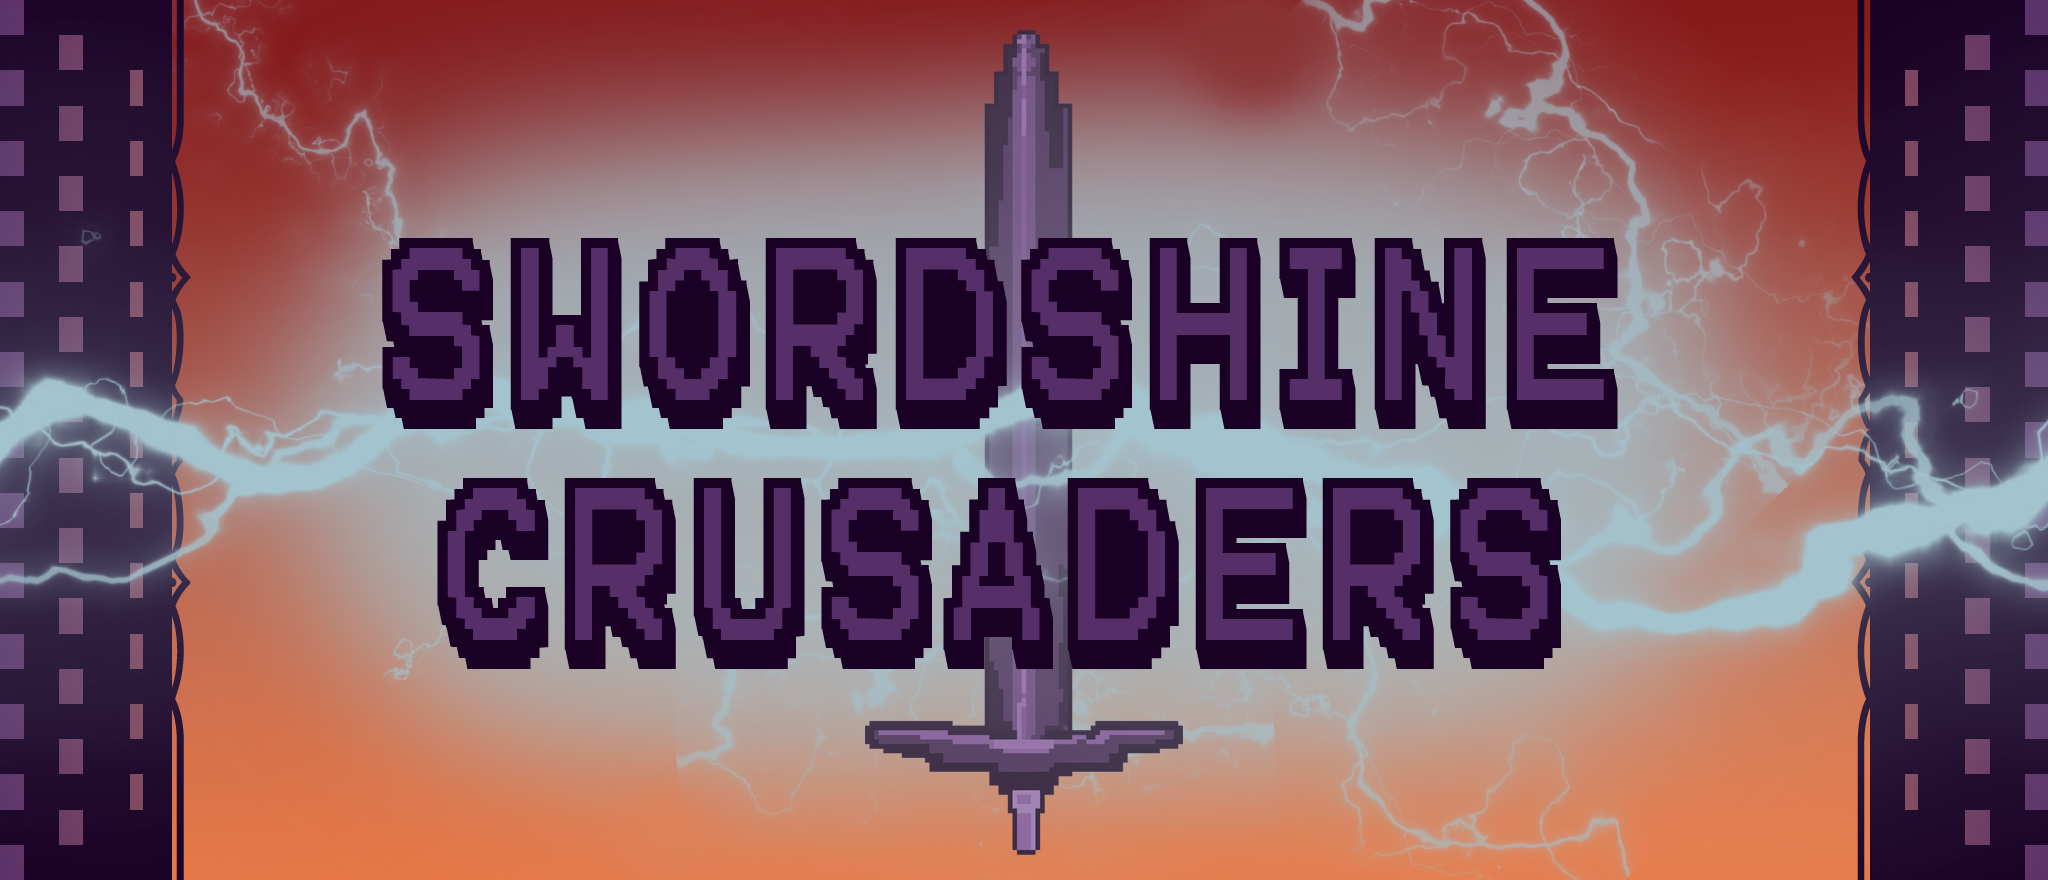 Swordshine Crussaders